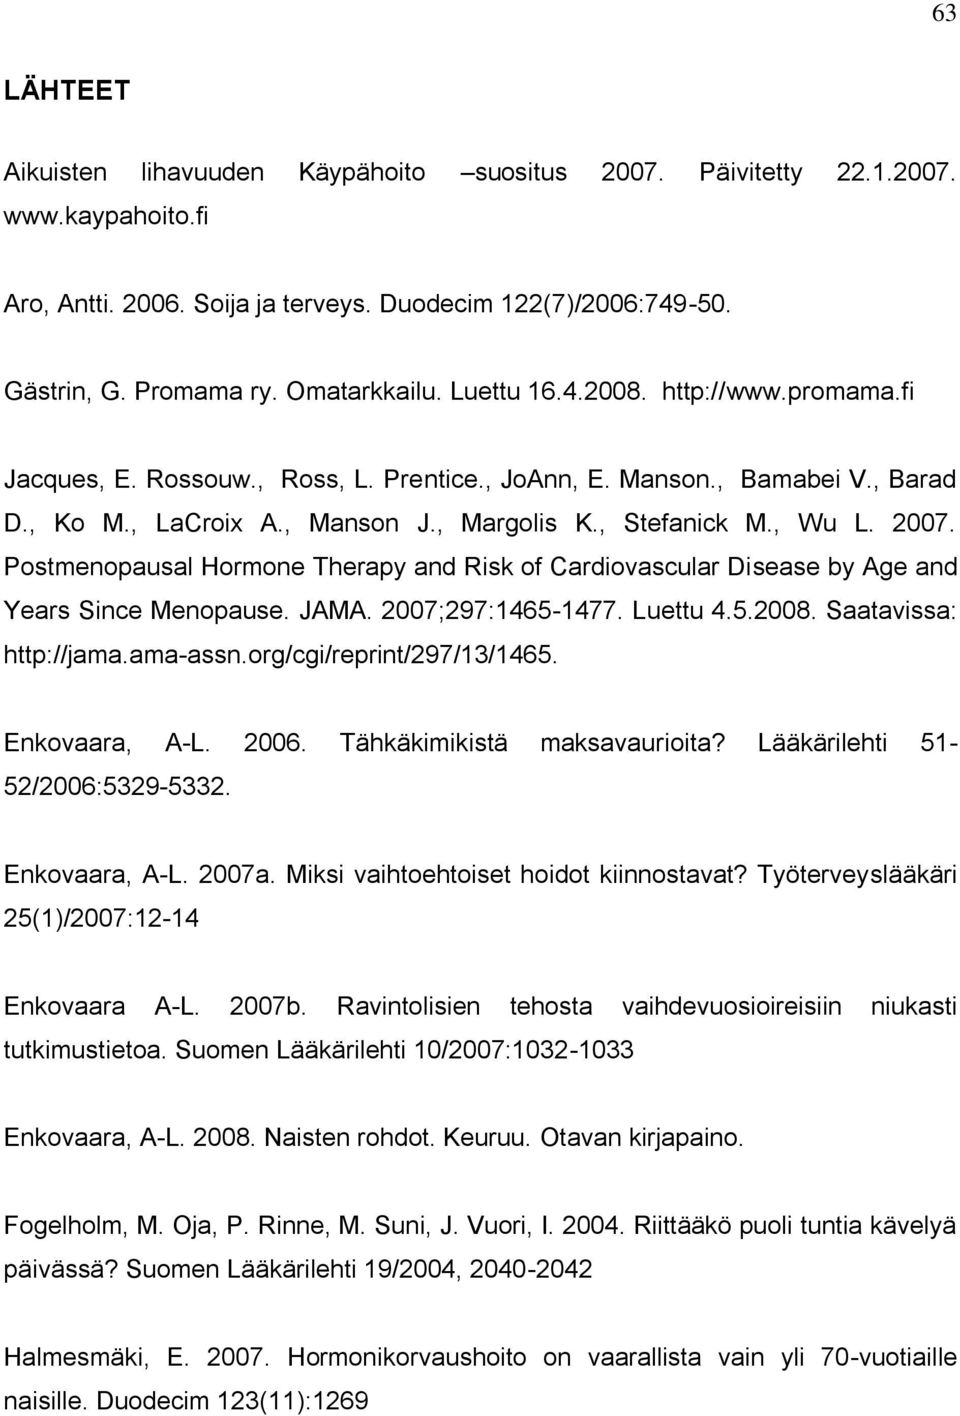 Postmenopausal Hormone Therapy and Risk of Cardiovascular Disease by Age and Years Since Menopause. JAMA. 2007;297:1465-1477. Luettu 4.5.2008. Saatavissa: http://jama.ama-assn.